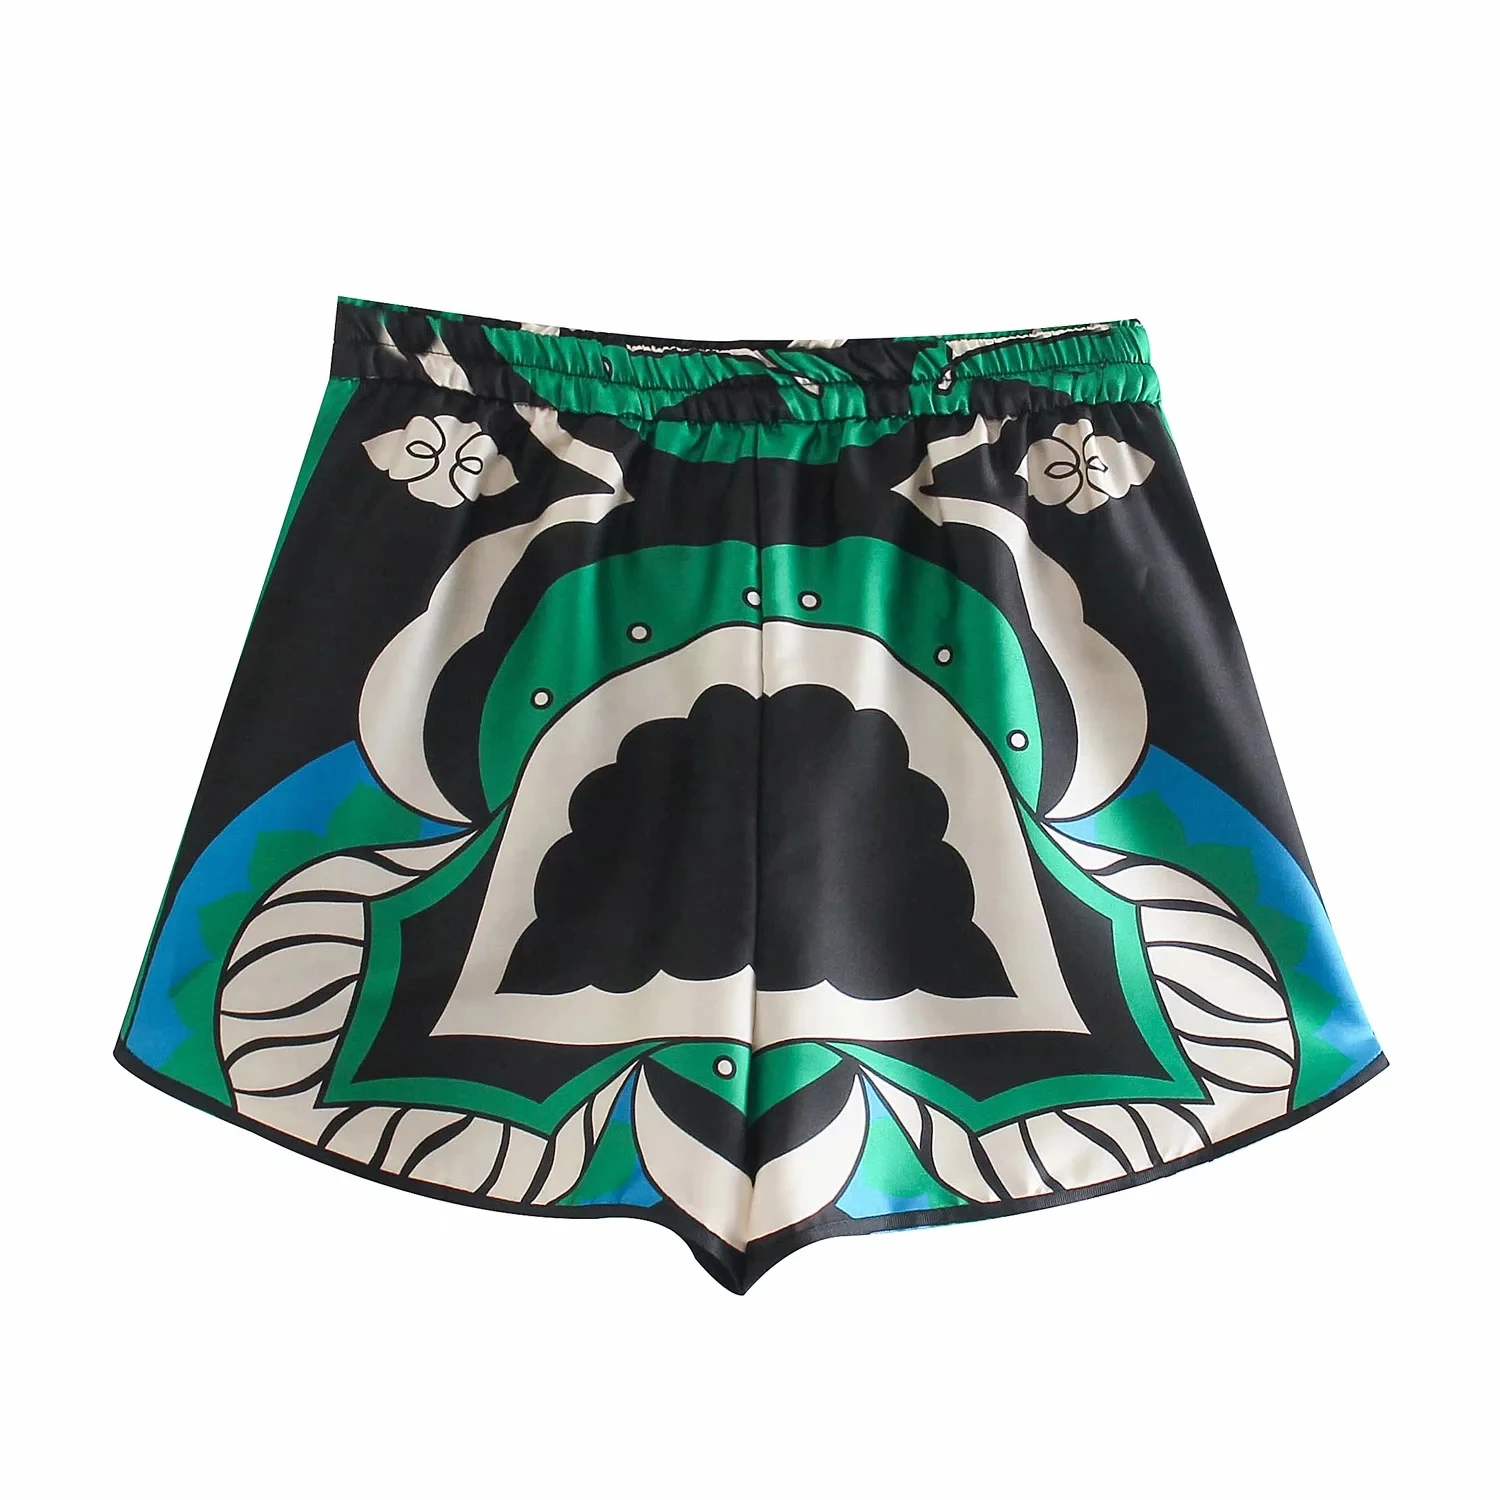 Foridol Oversized Green Print Boho Women Shorts Sets Shirts Shorts Pants Three Pieces Fashion Suits Matching Sets 2021 Autumn co ord sets women